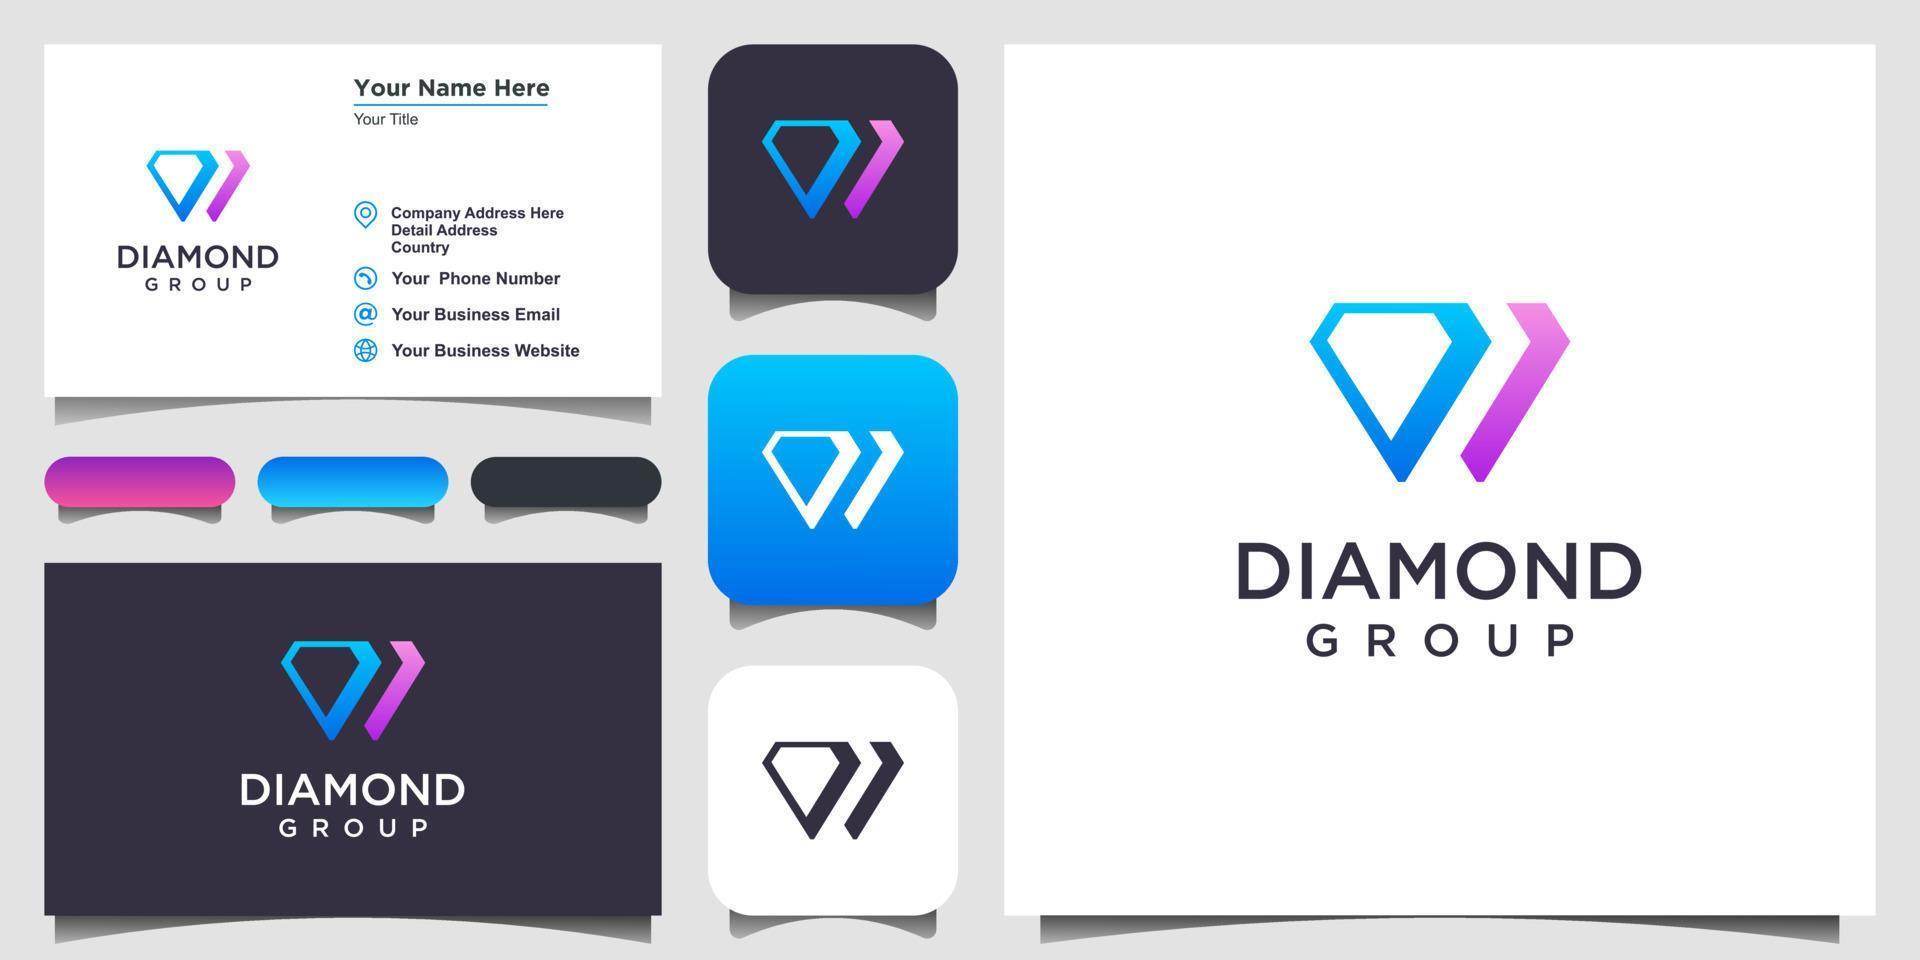 Diamond logo design inspiration. logo design and business card vector